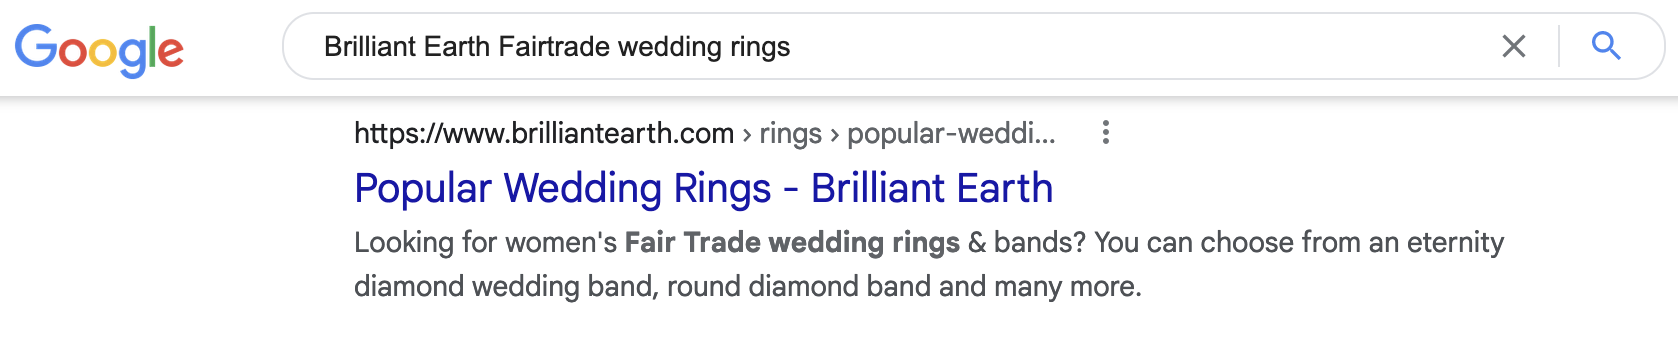 Brilliant Earth advertising fair trade wedding ringsn in 2021: a specious claim.